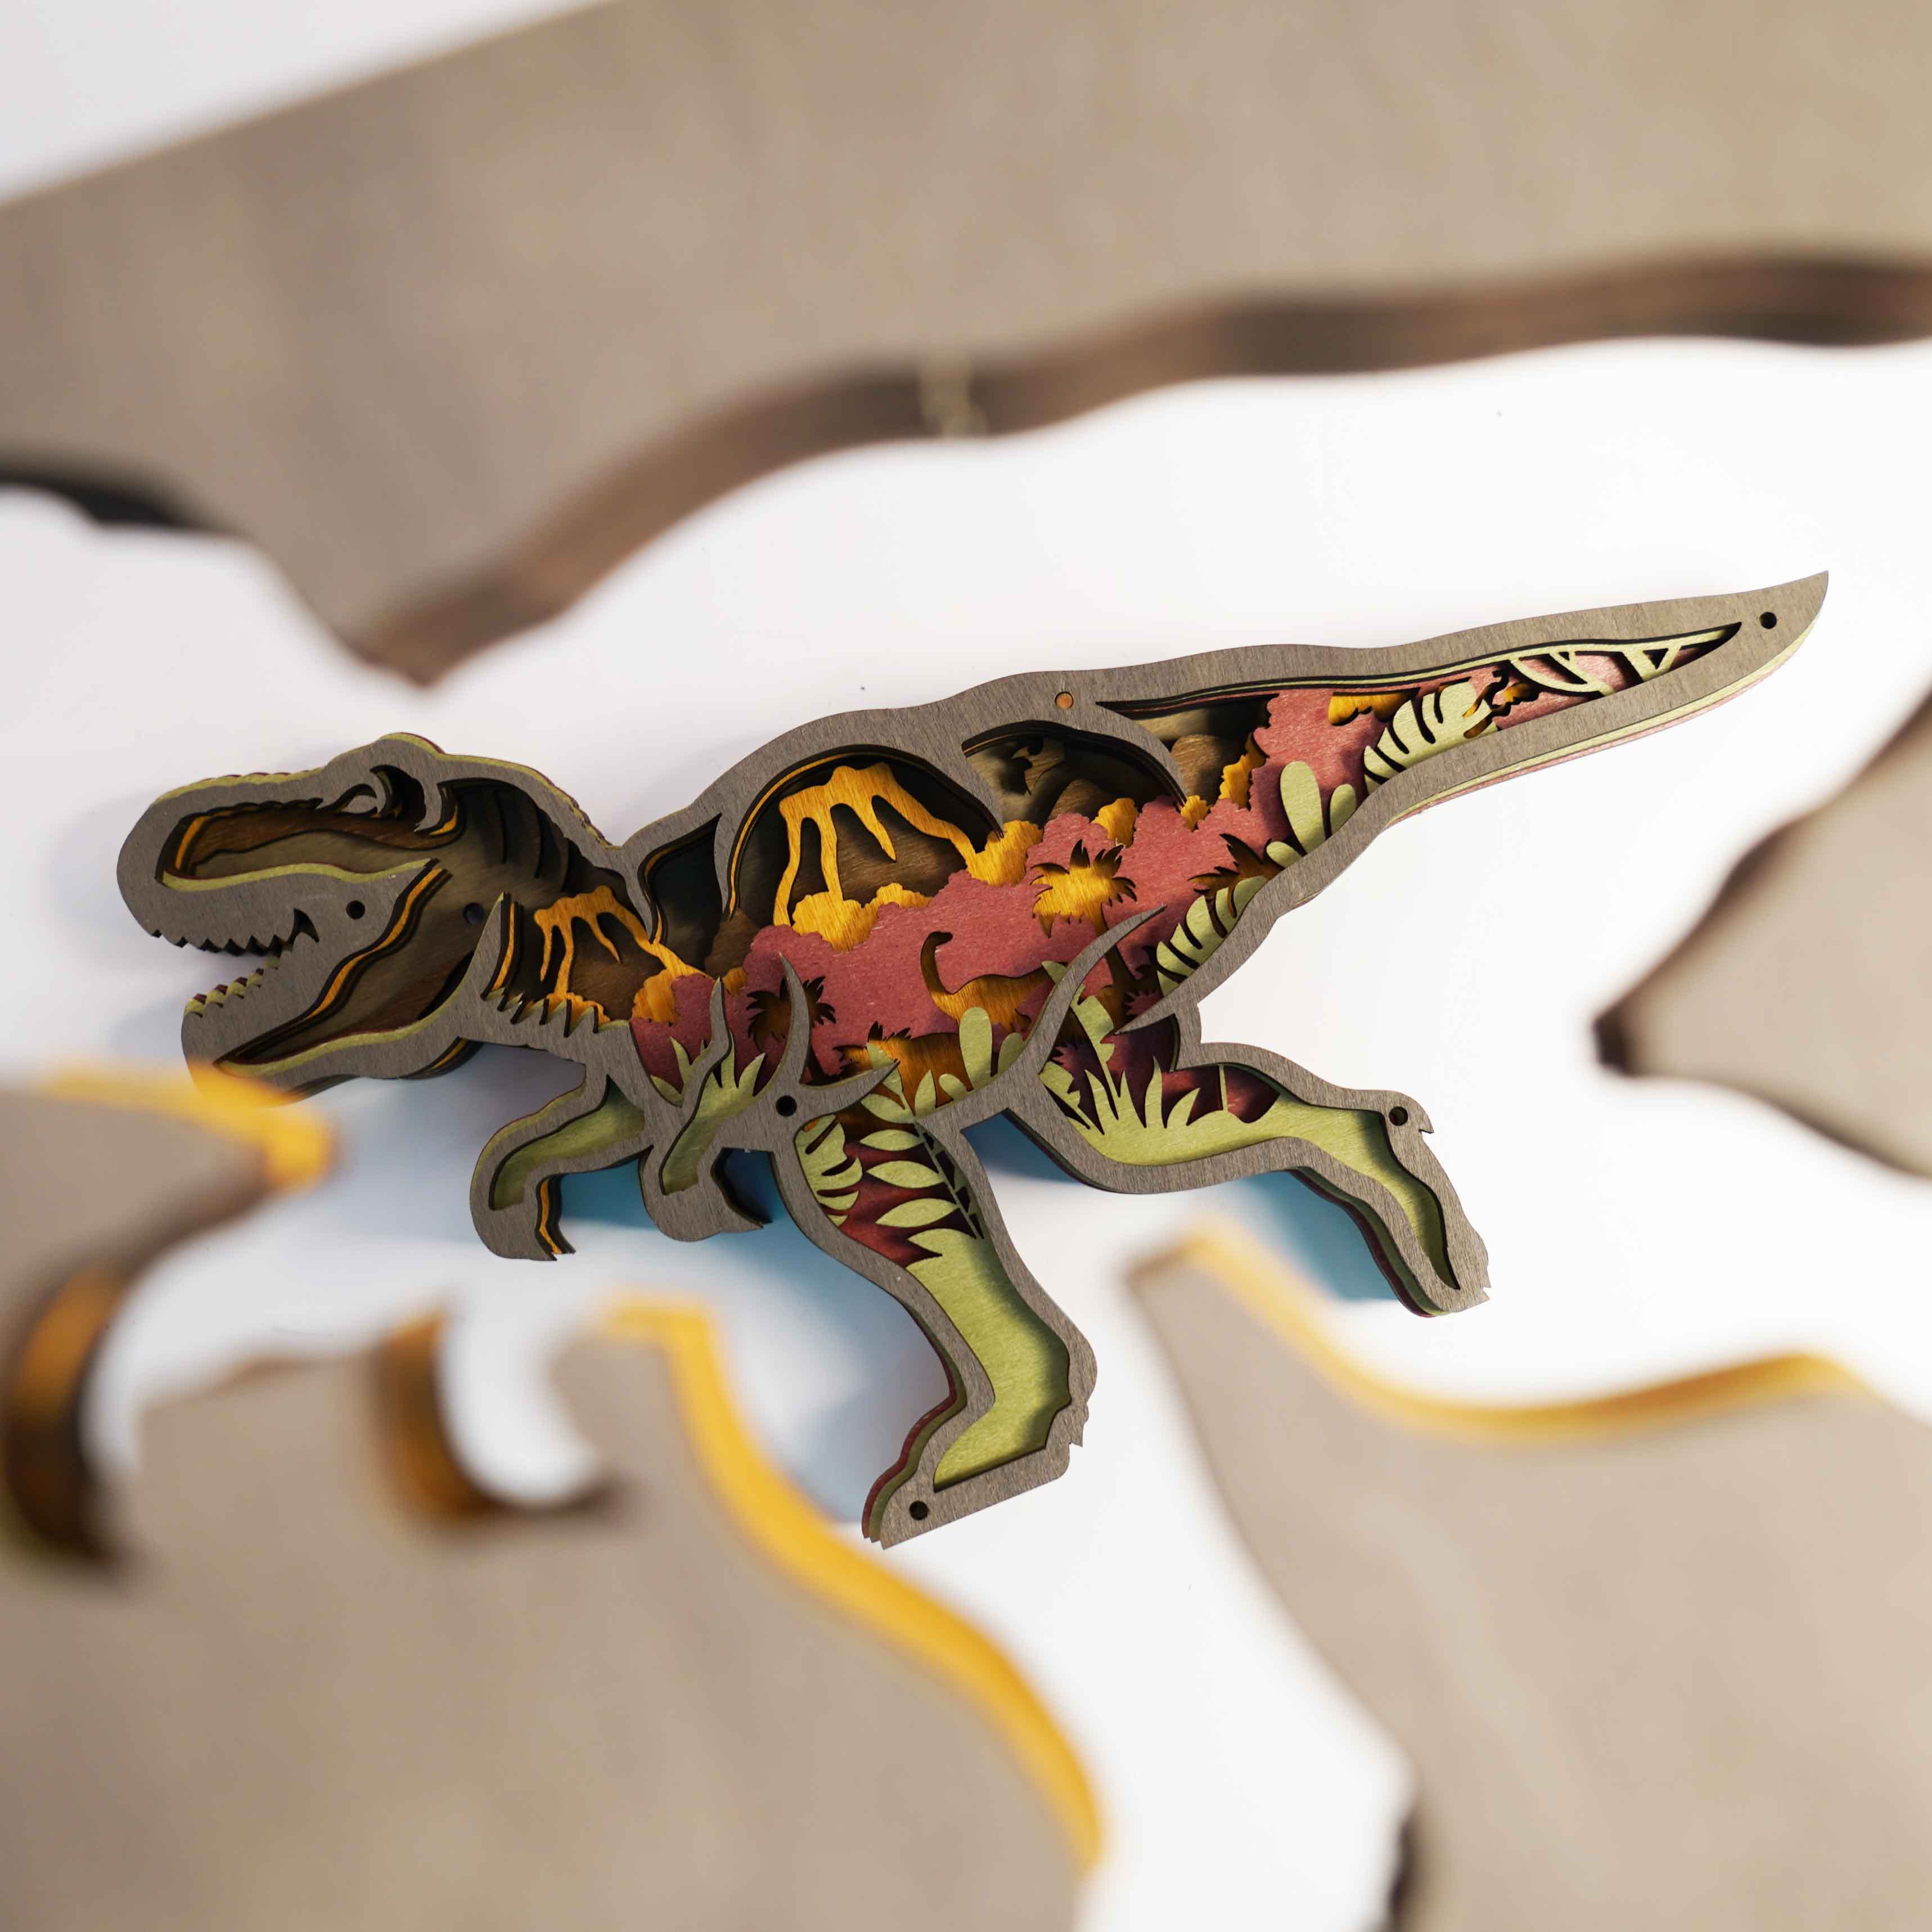 Hot Sale 49% OFF-Tyrannosaurus 3D Carving Puzzle Night Light